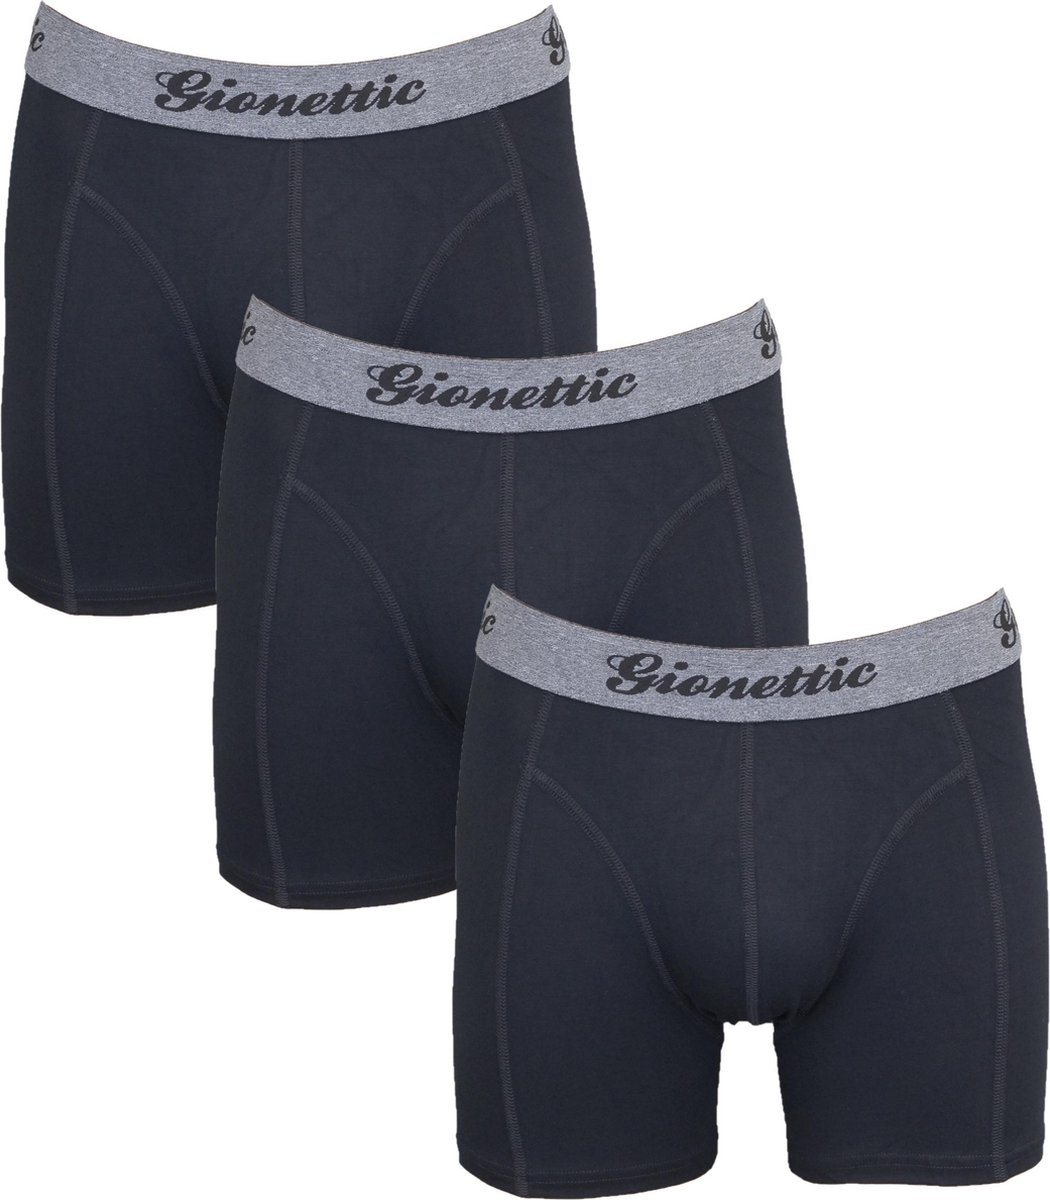 3-Pack Gionettic Modal Heren boxershorts Zwart maat S